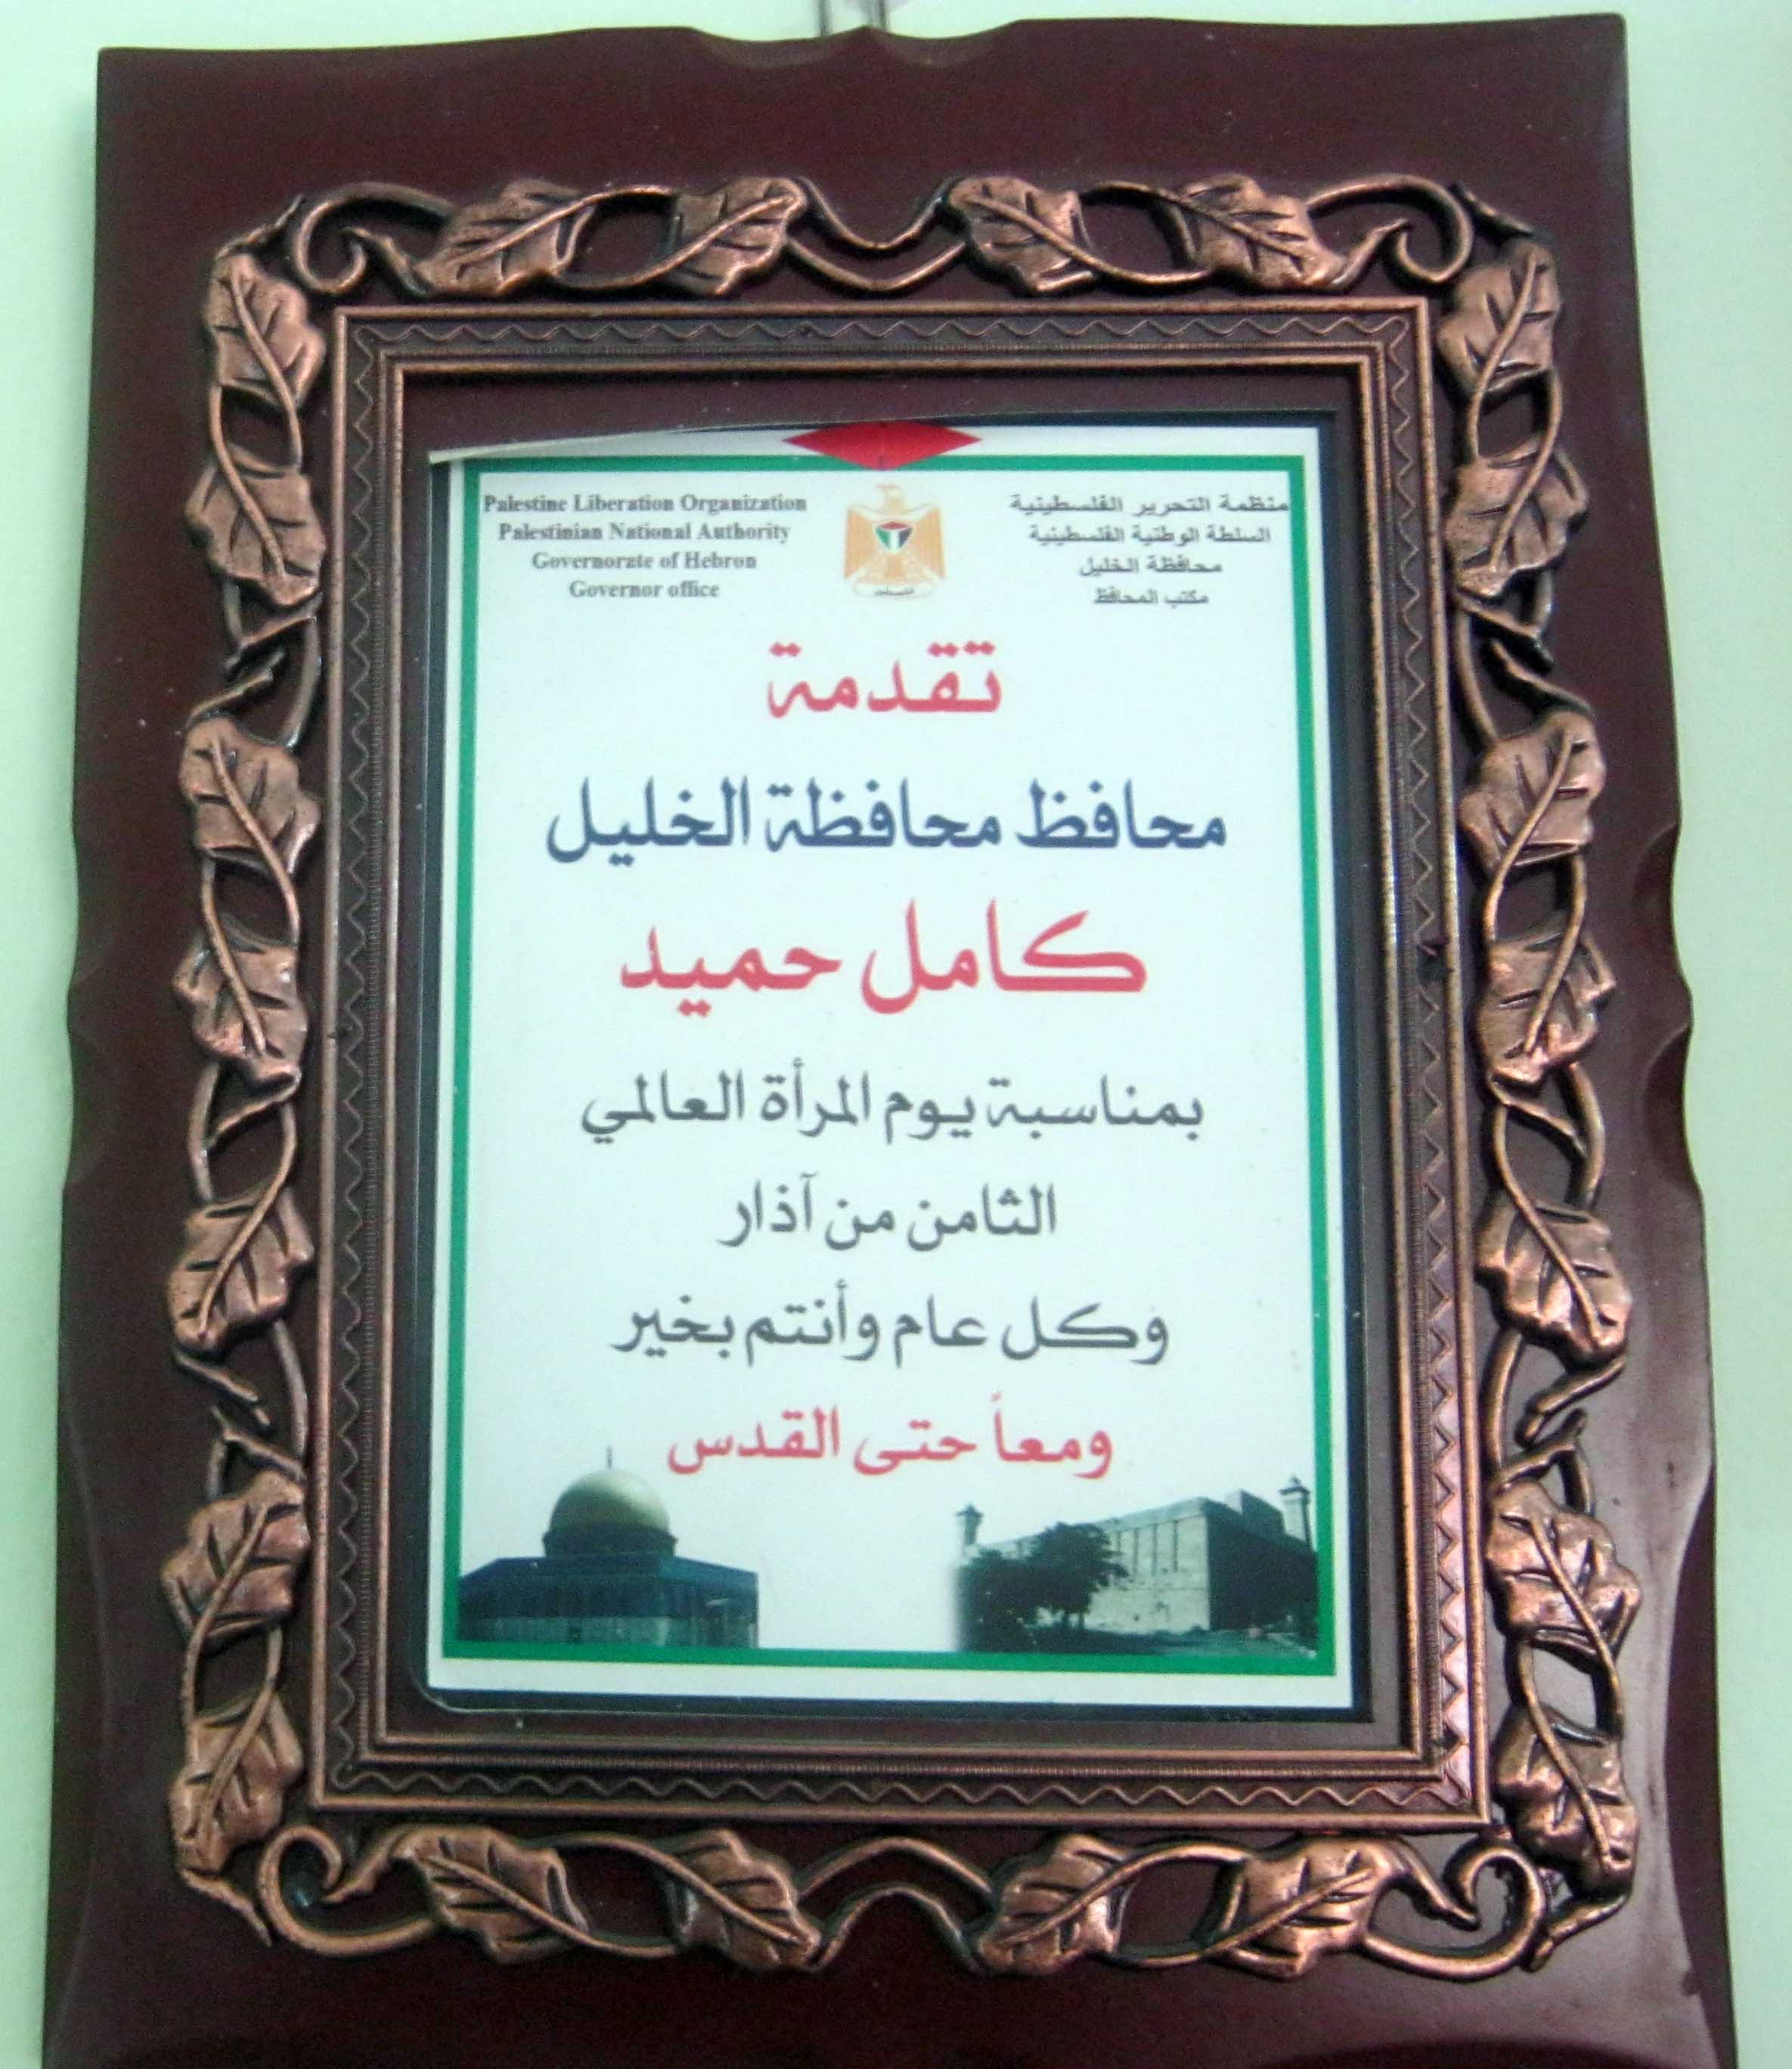  Hebron Governorate Award